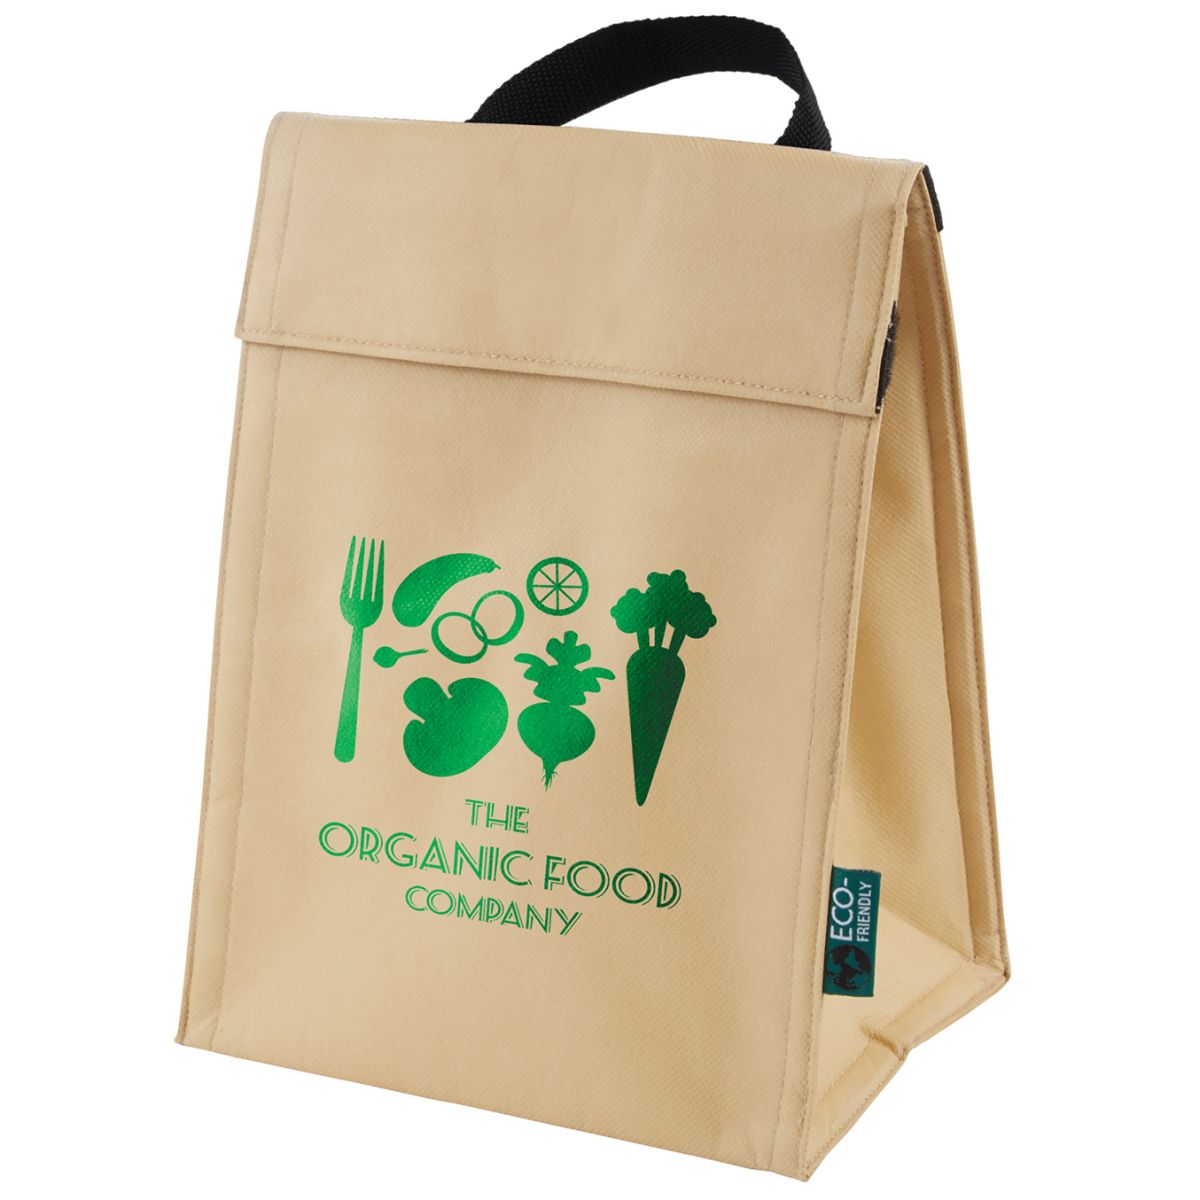 eco friendly bags